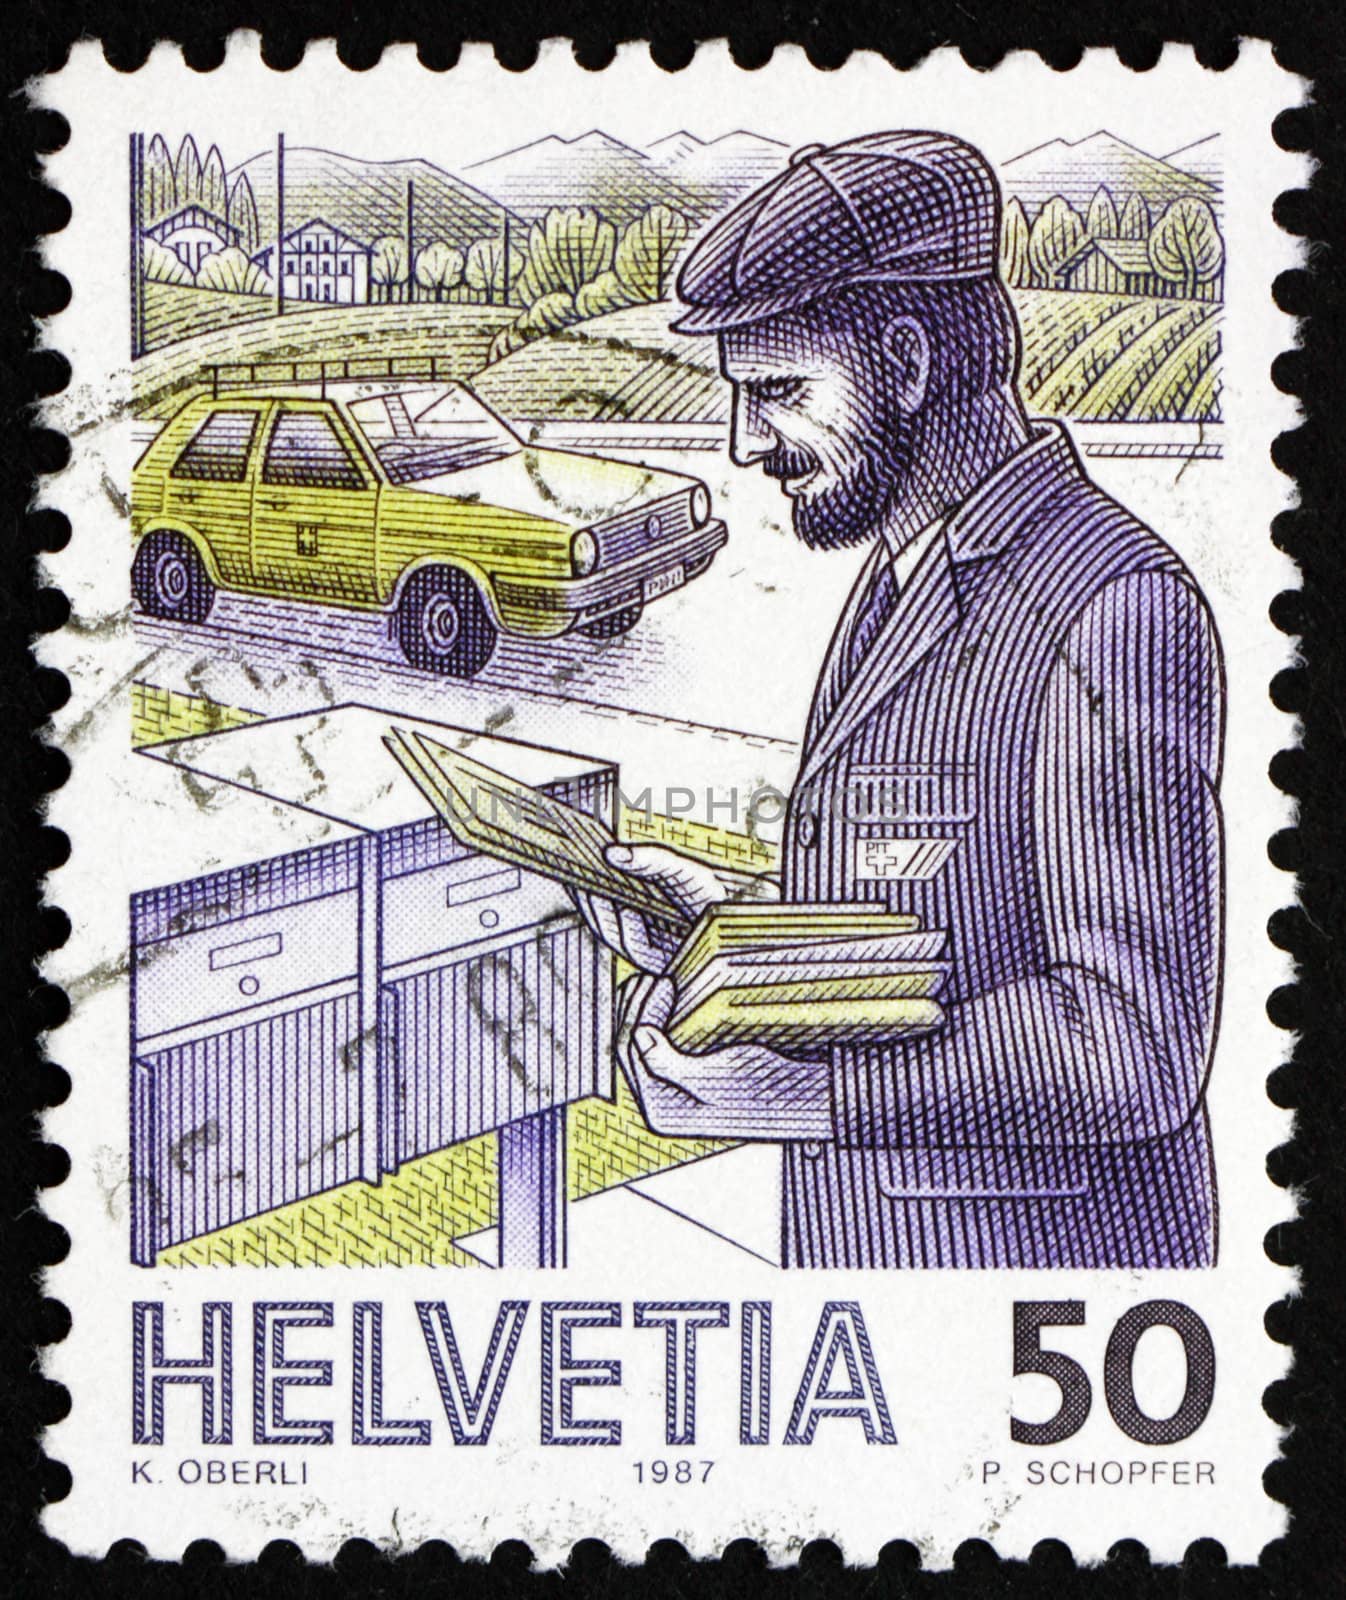 SWITZERLAND - CIRCA 1987: a stamp printed in the Switzerland shows Postman, 1986, Mail Handling, circa 1987